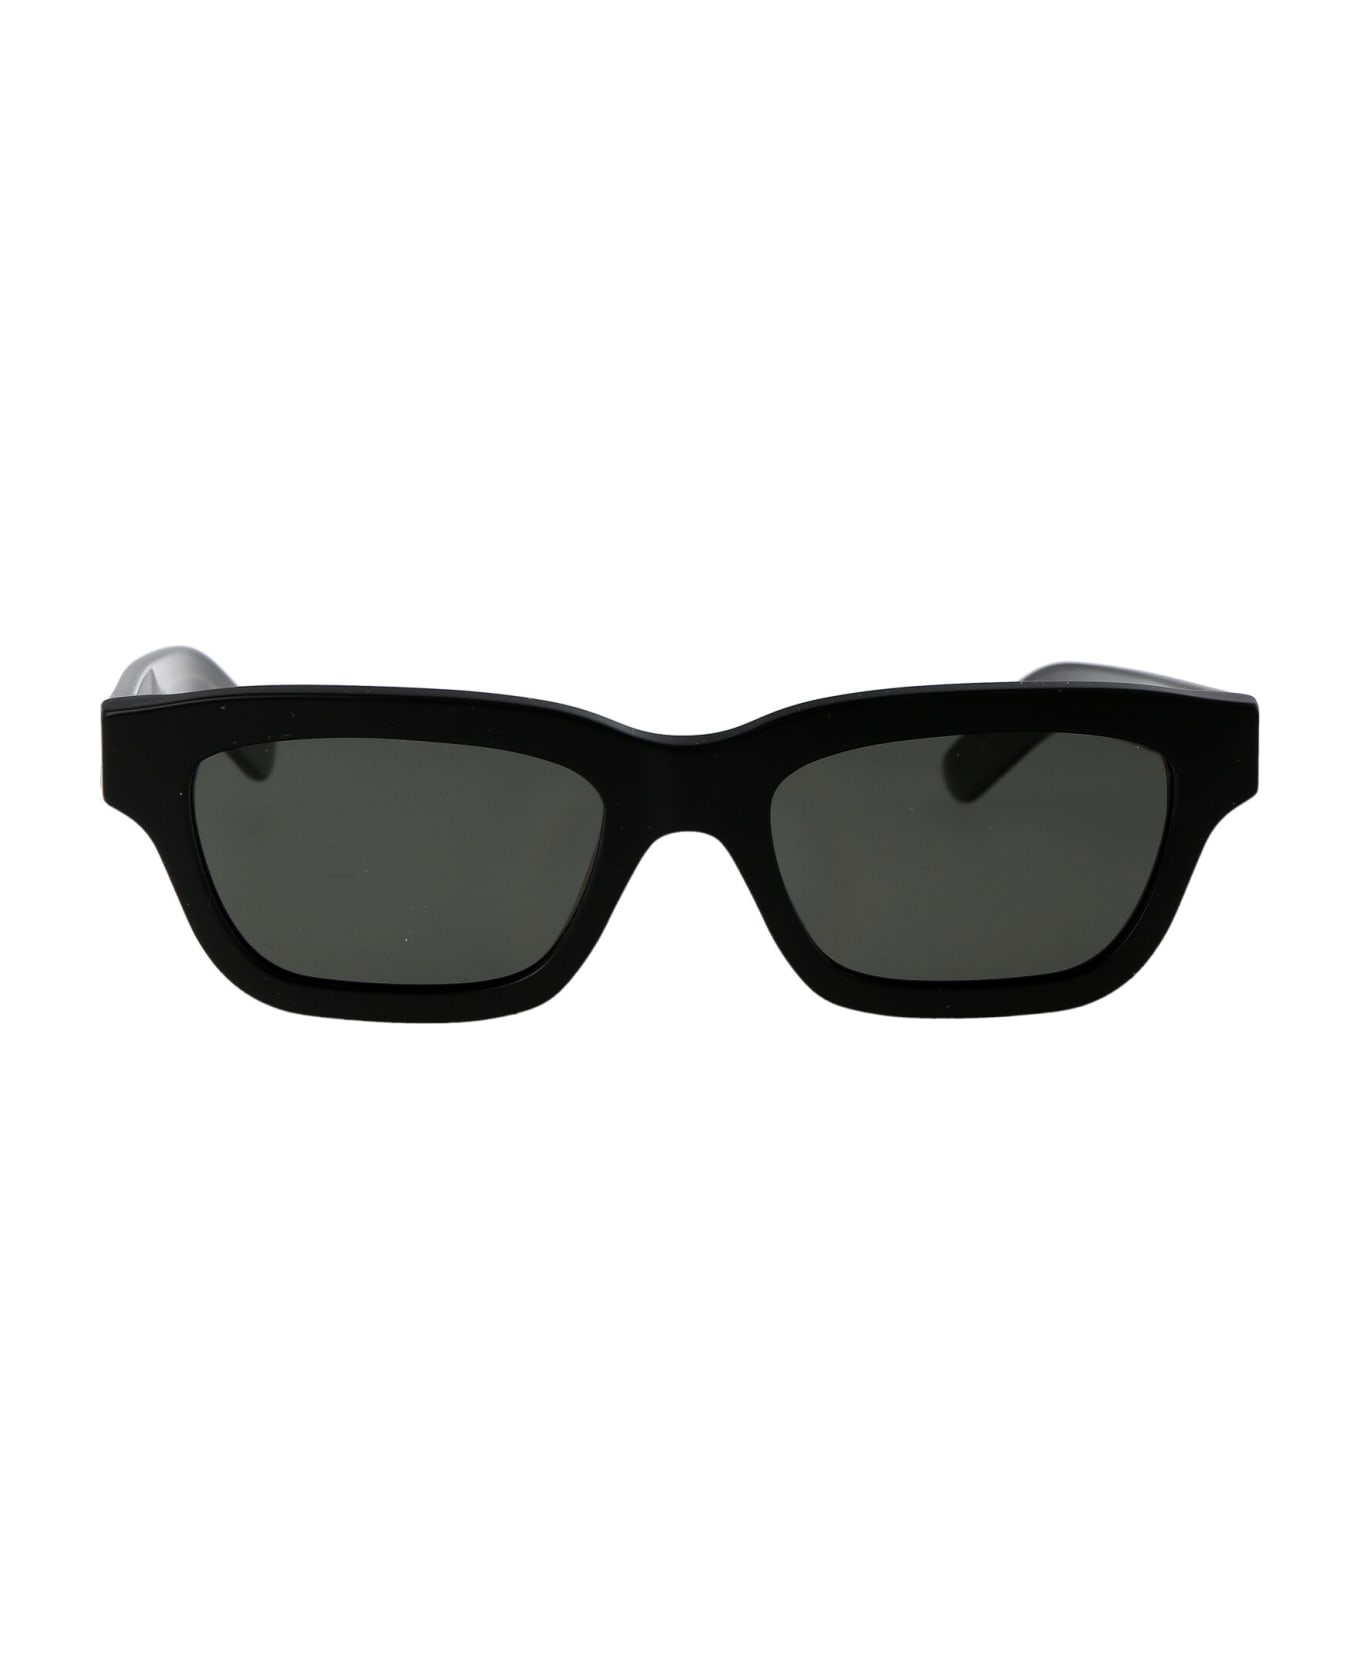 RETROSUPERFUTURE Milano Aspesi Sunglasses - BLACK サングラス